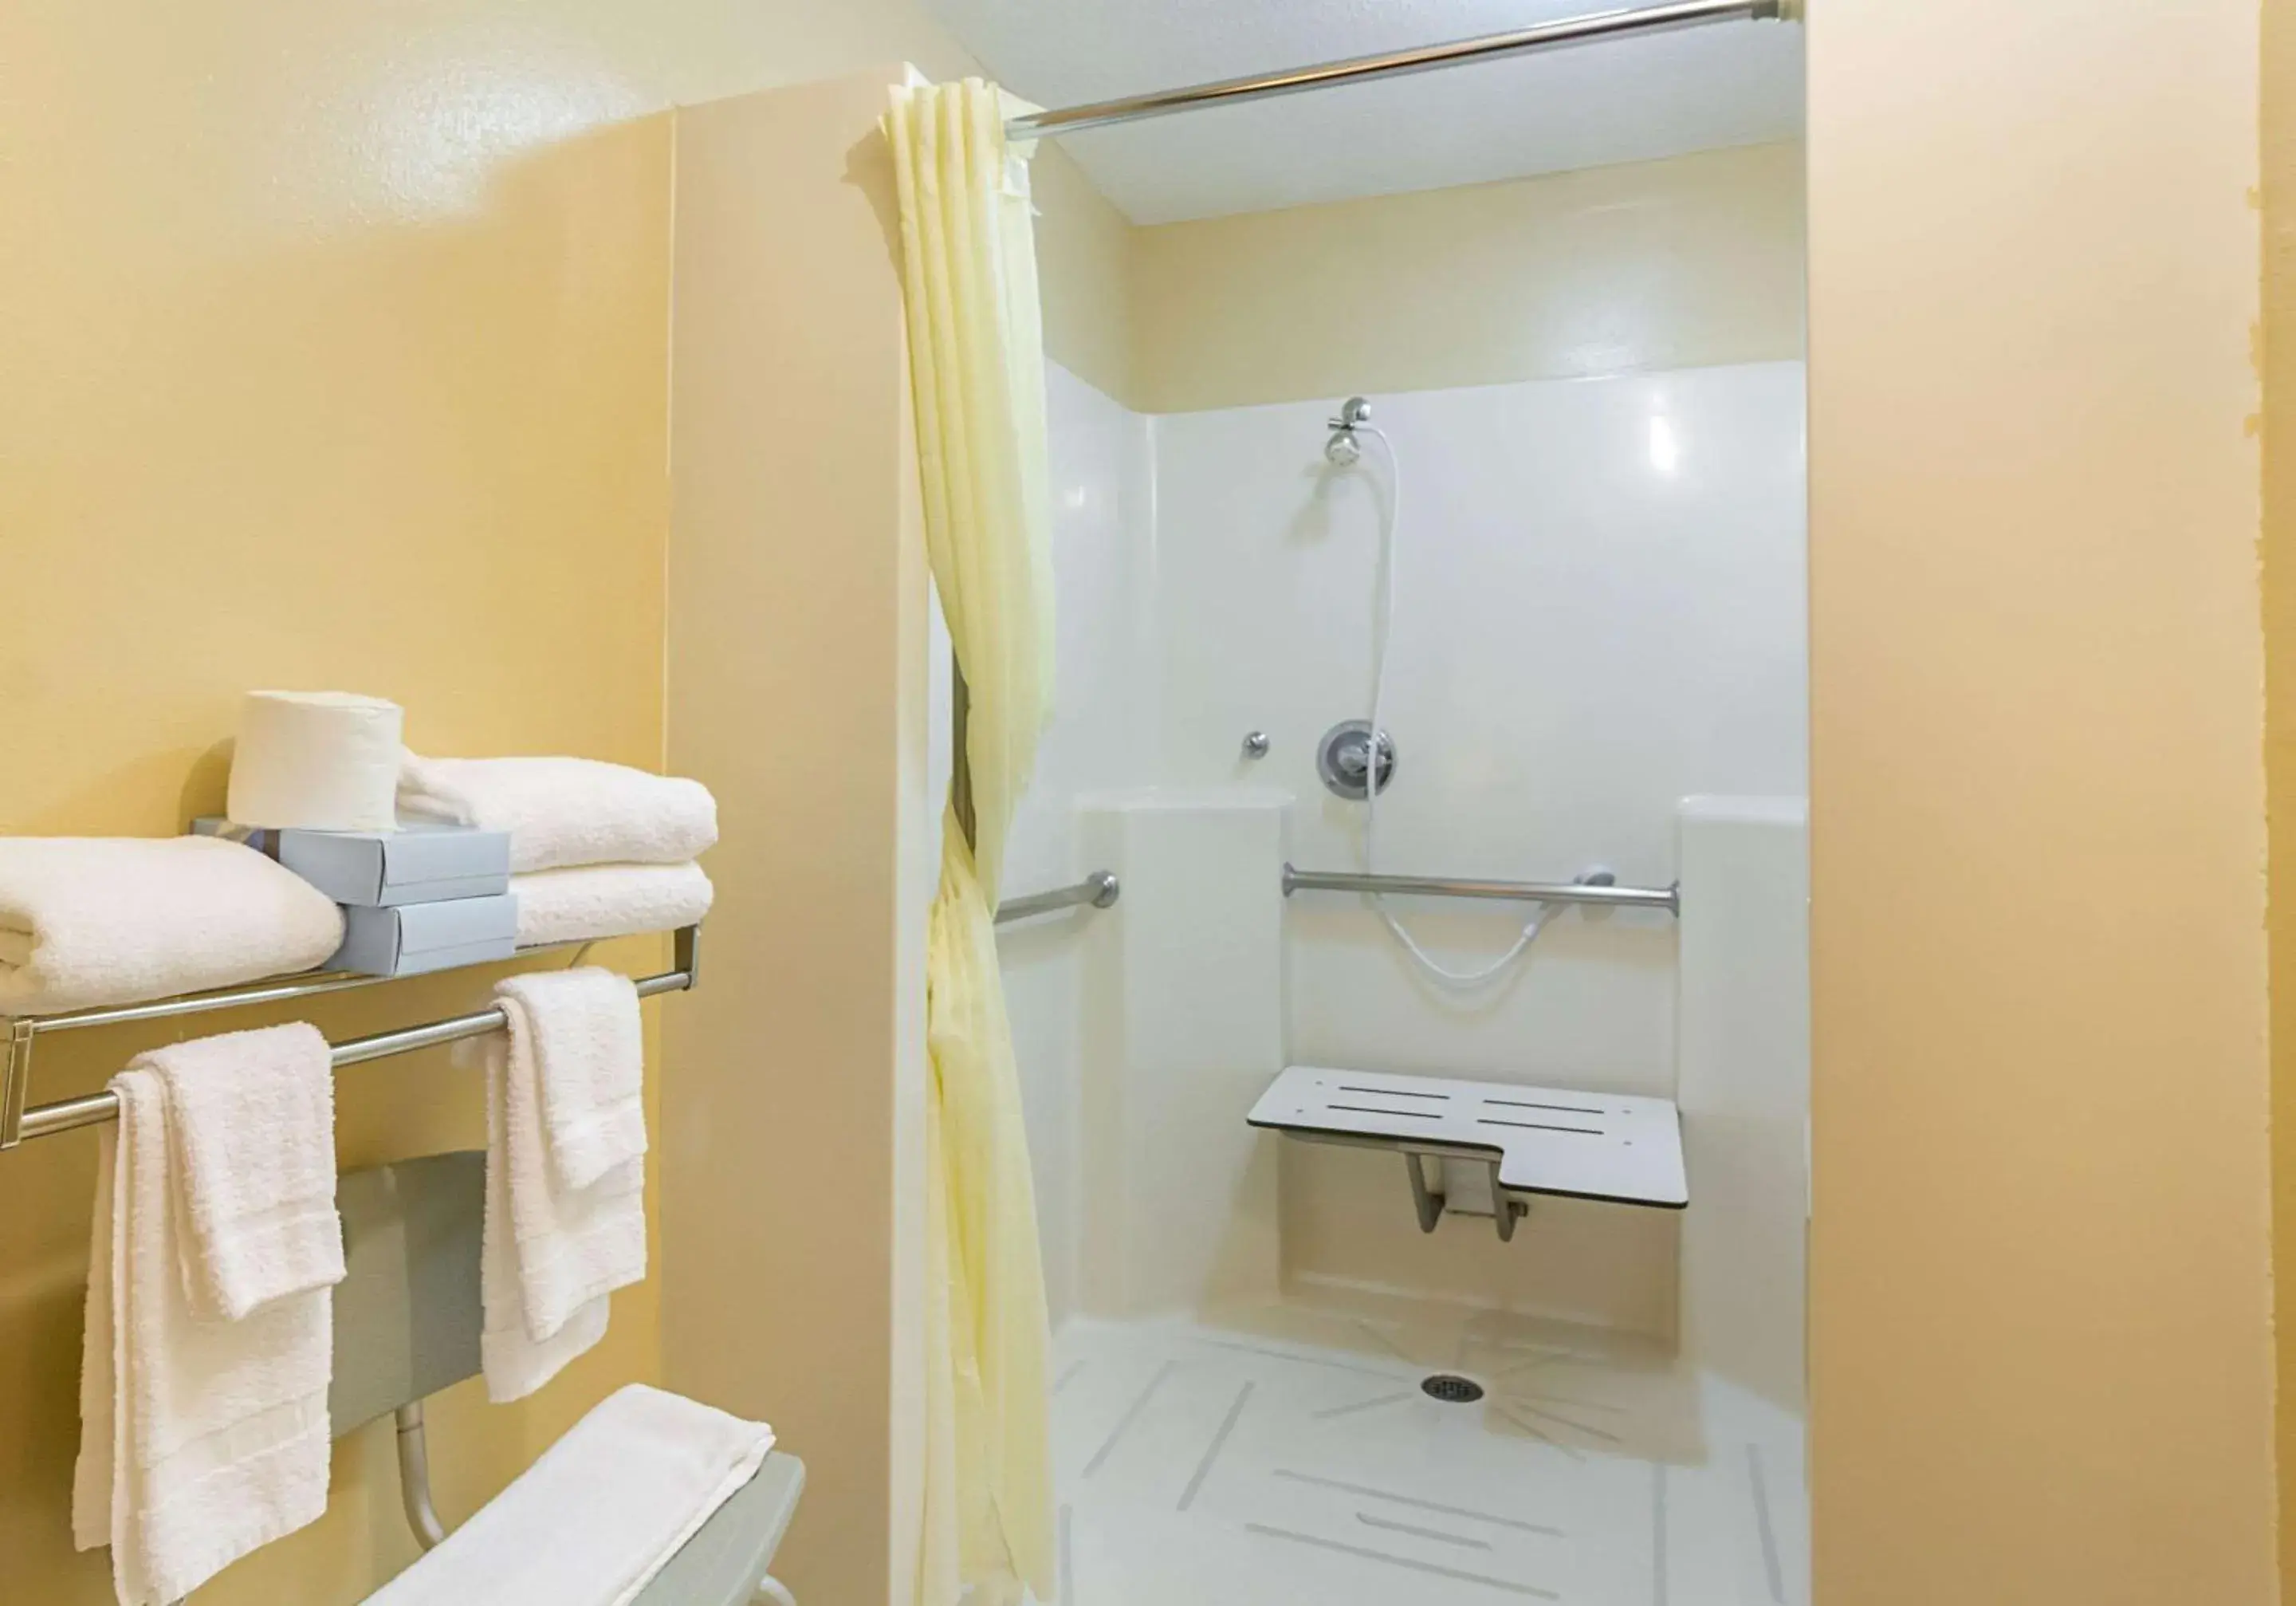 Photo of the whole room, Bathroom in Americas Best Value Inn Fargo